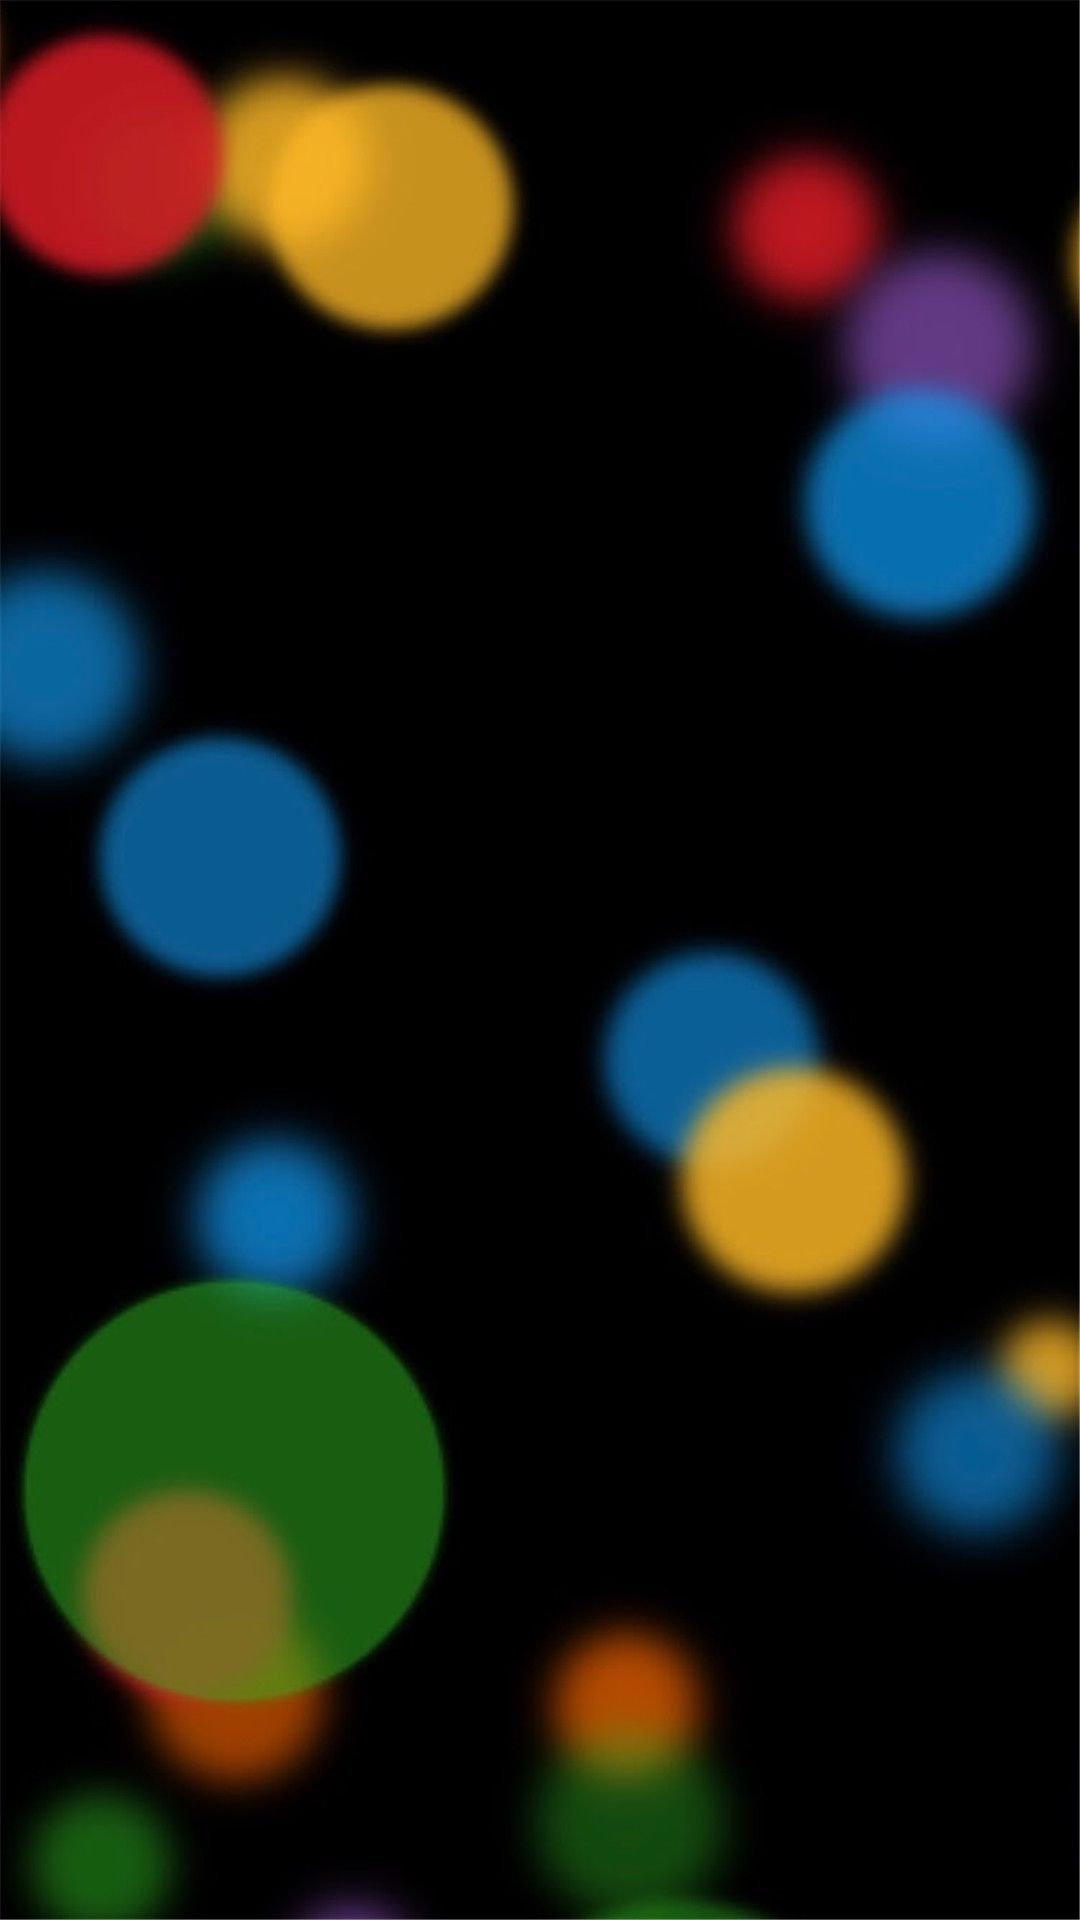 fondos de pantalla en movimiento para iphone 6s,azul,circulo,modelo,verde,ligero